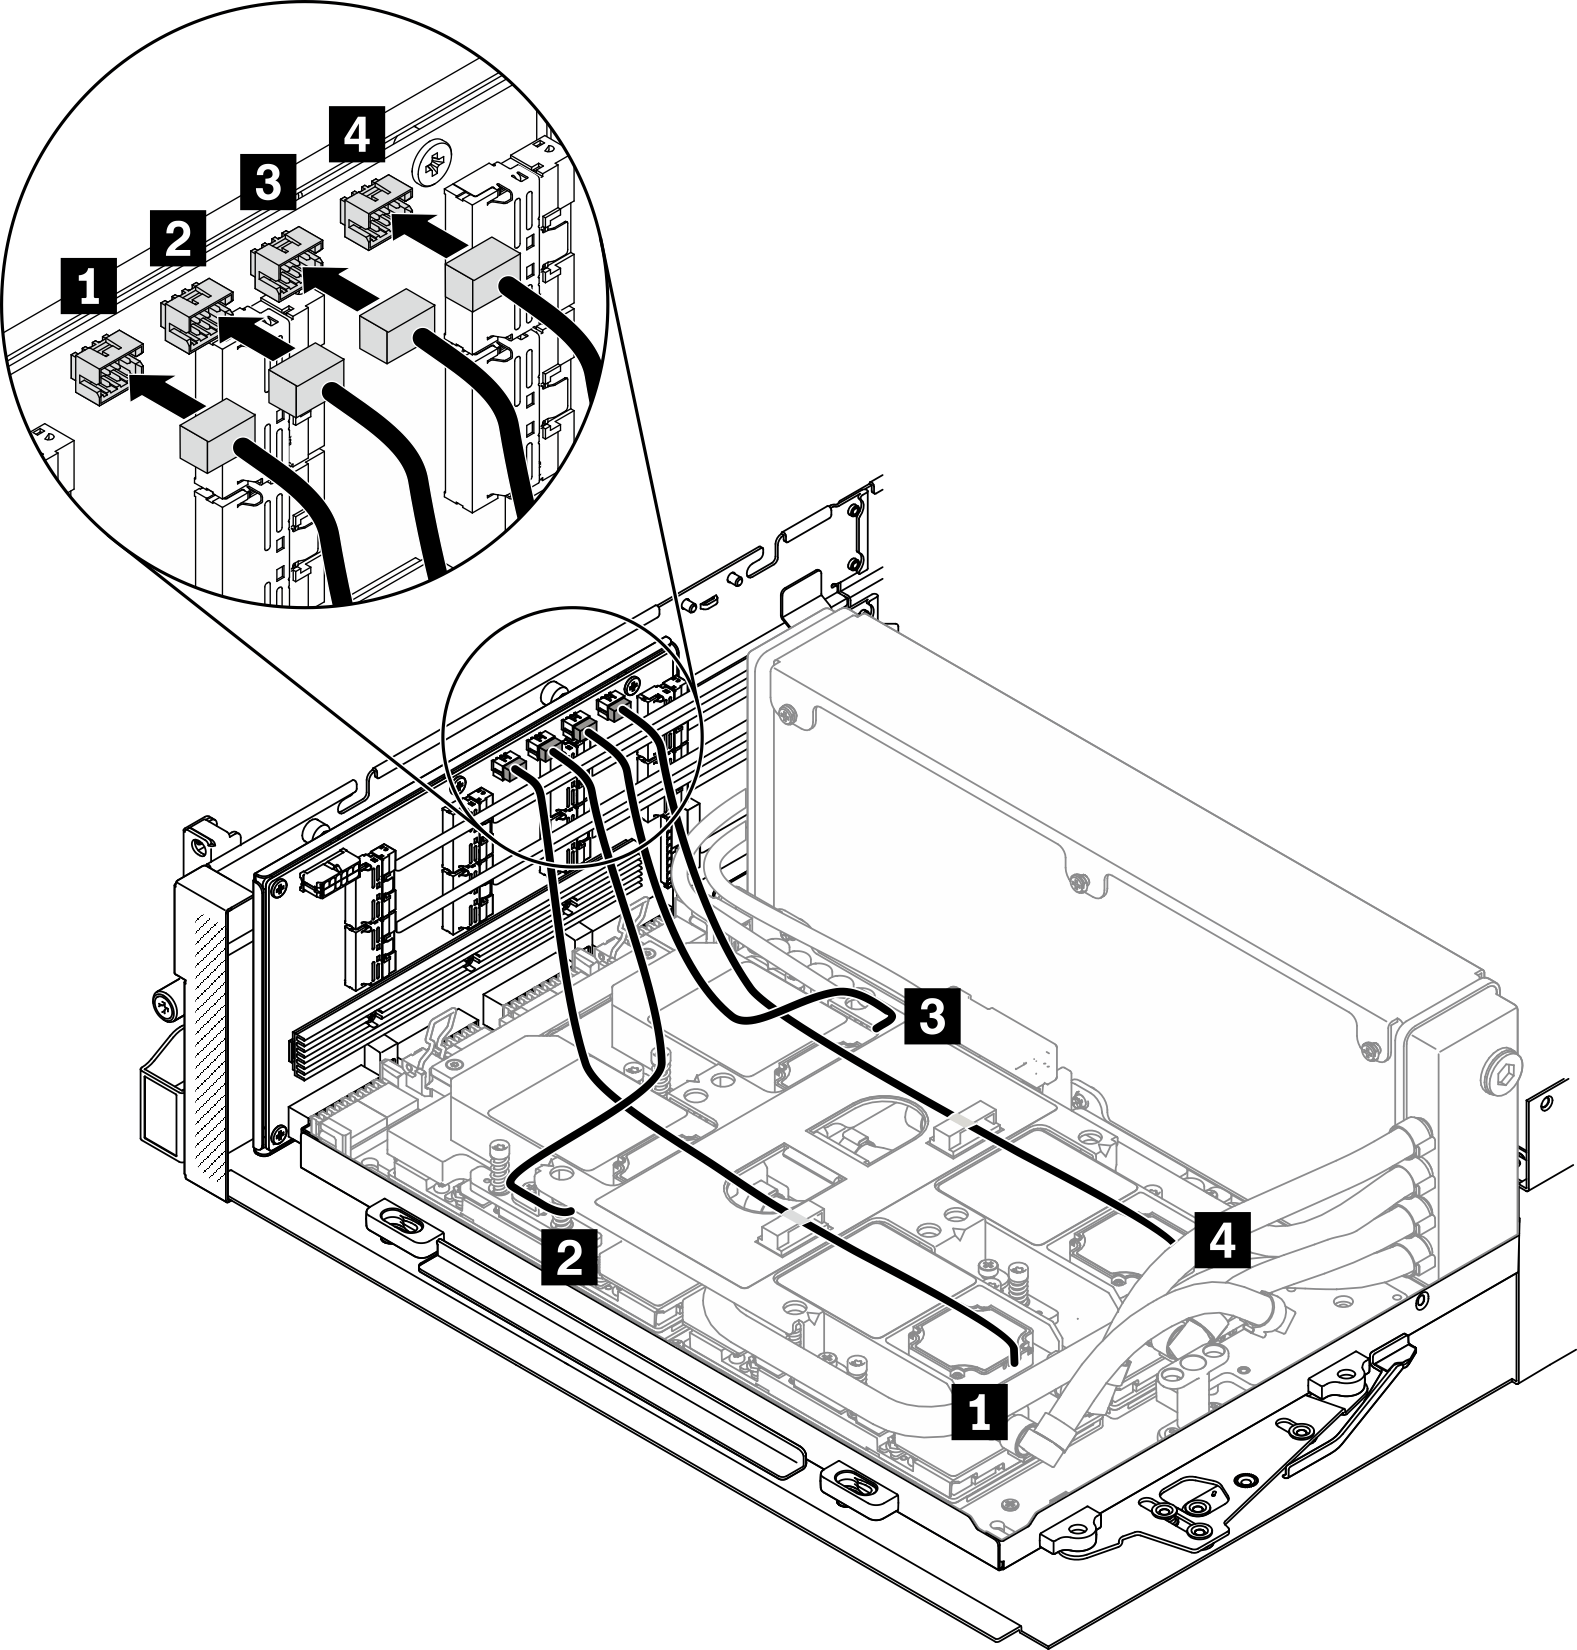 Connecting conjunto de placa fria pump cables to the conjunto da placa temporizadora